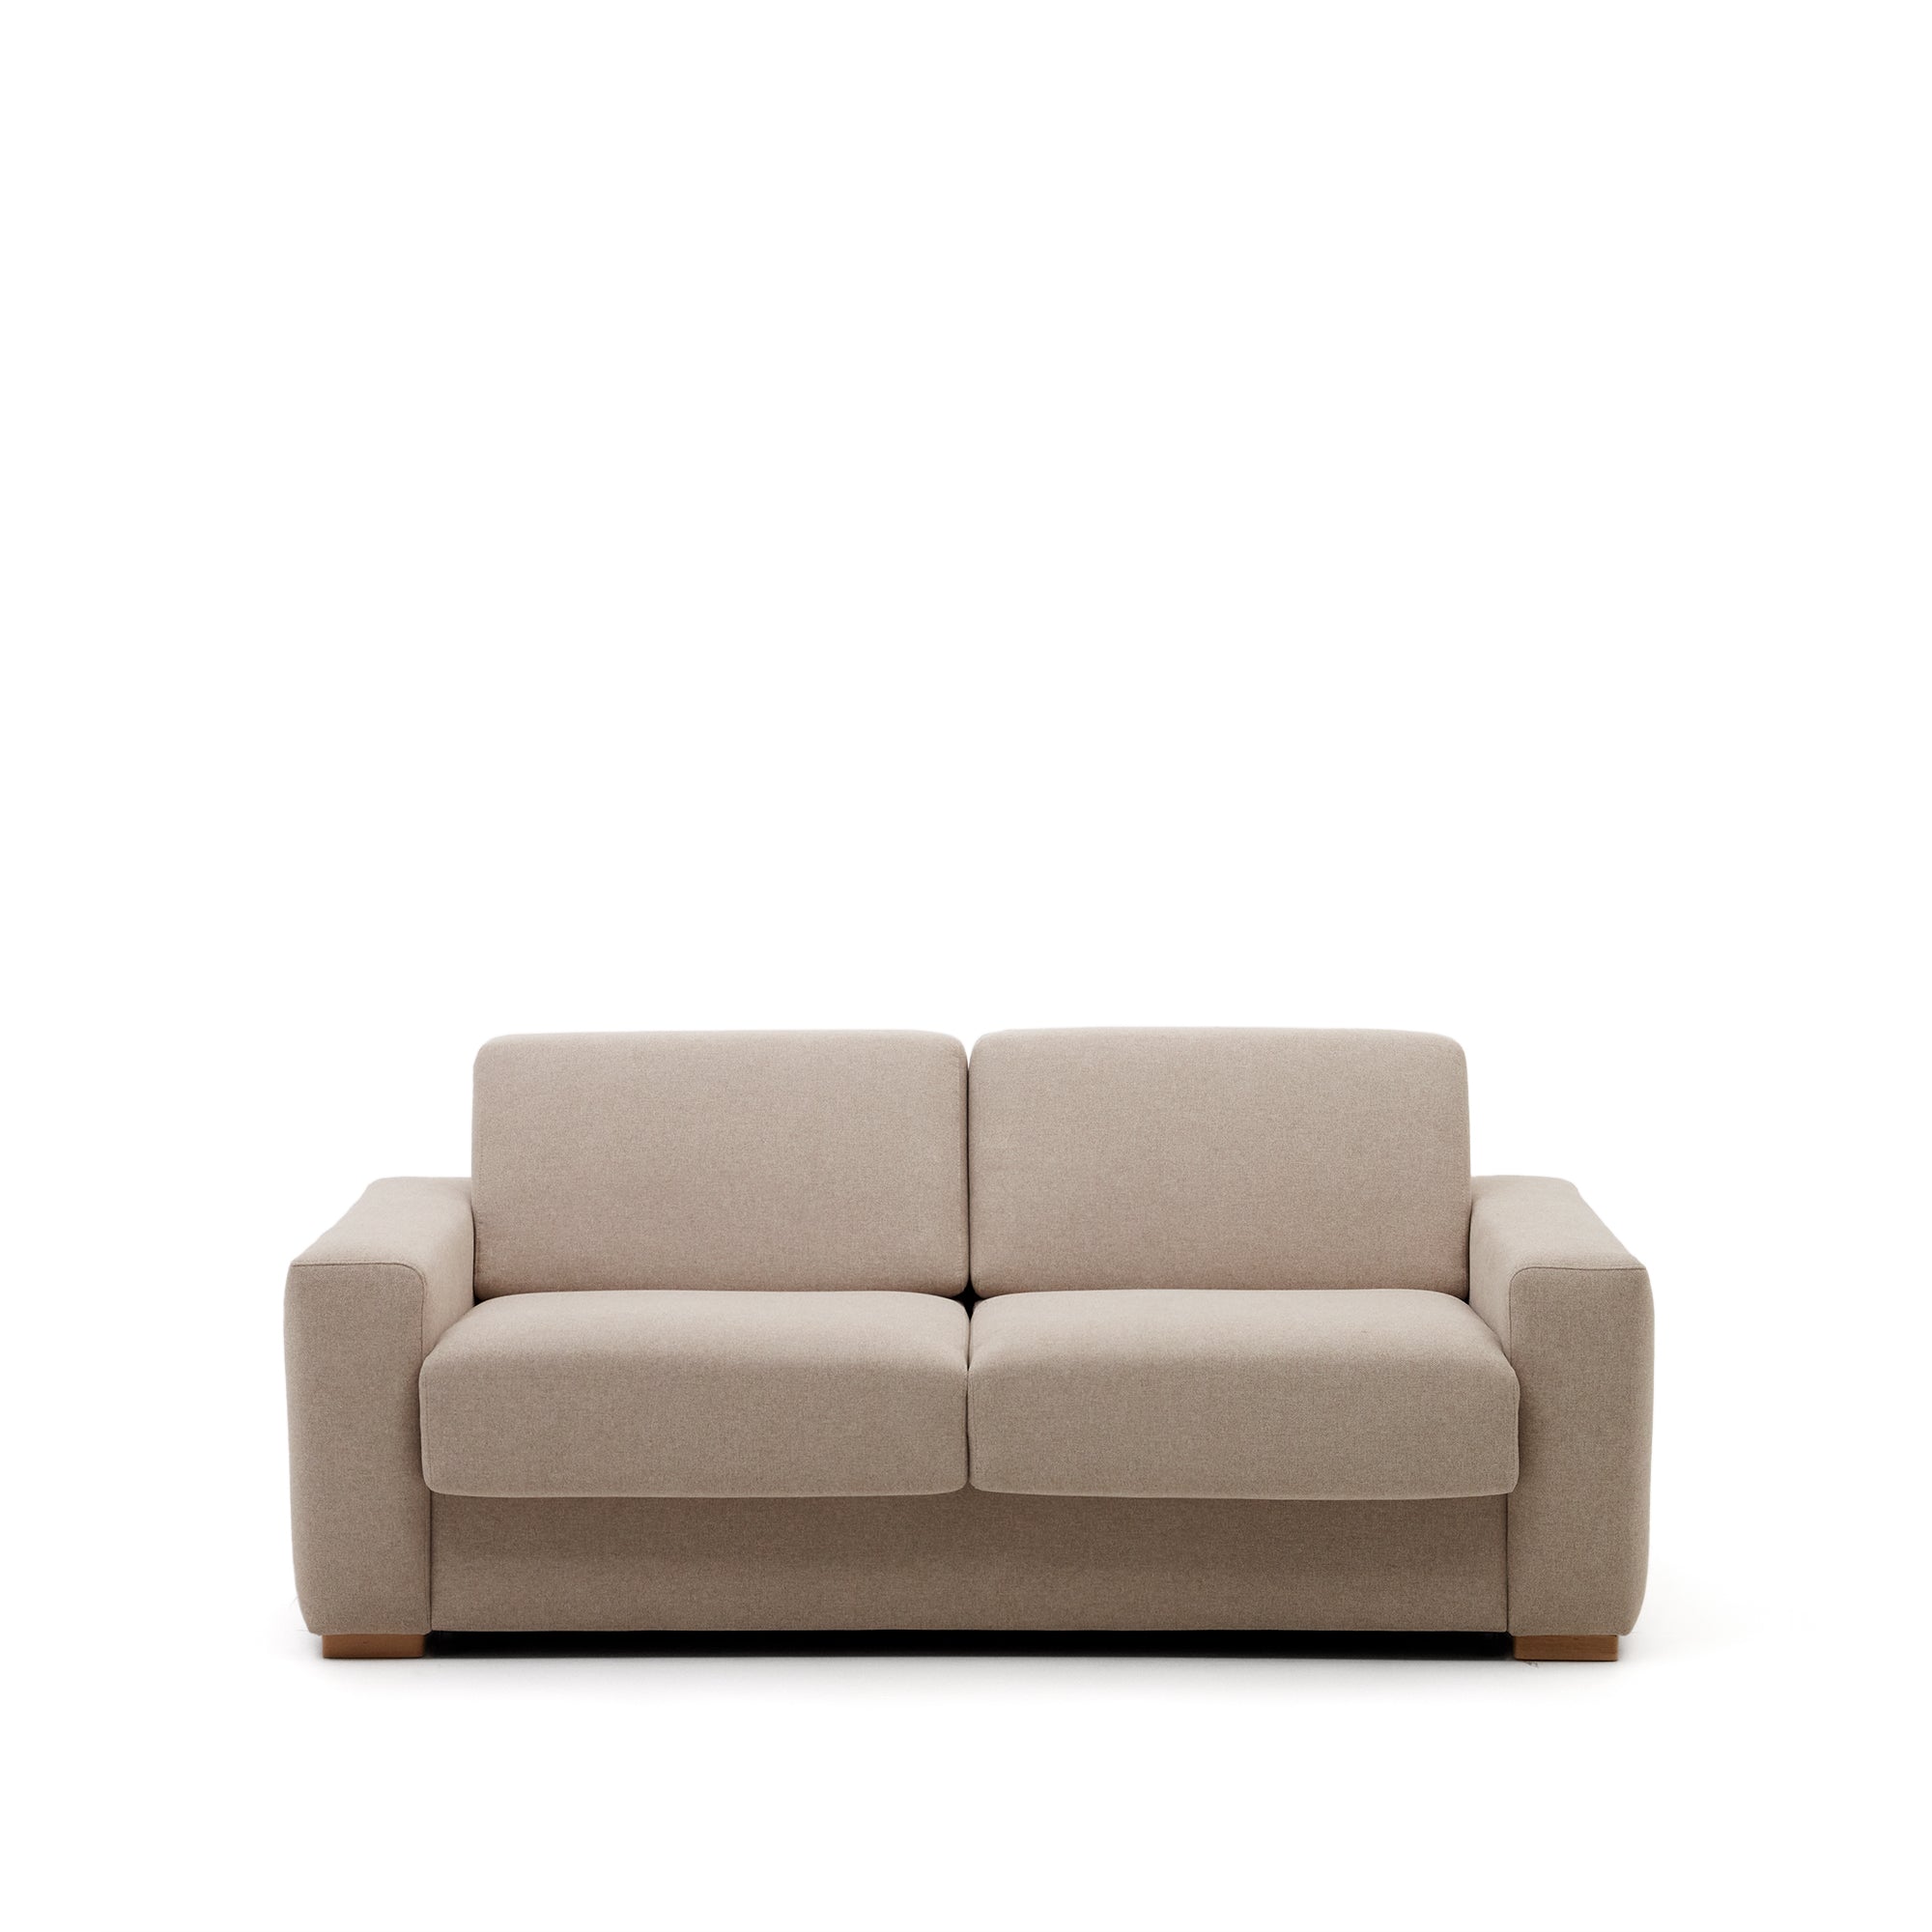 Anley 3-seater sofa bed in beige 244 cm